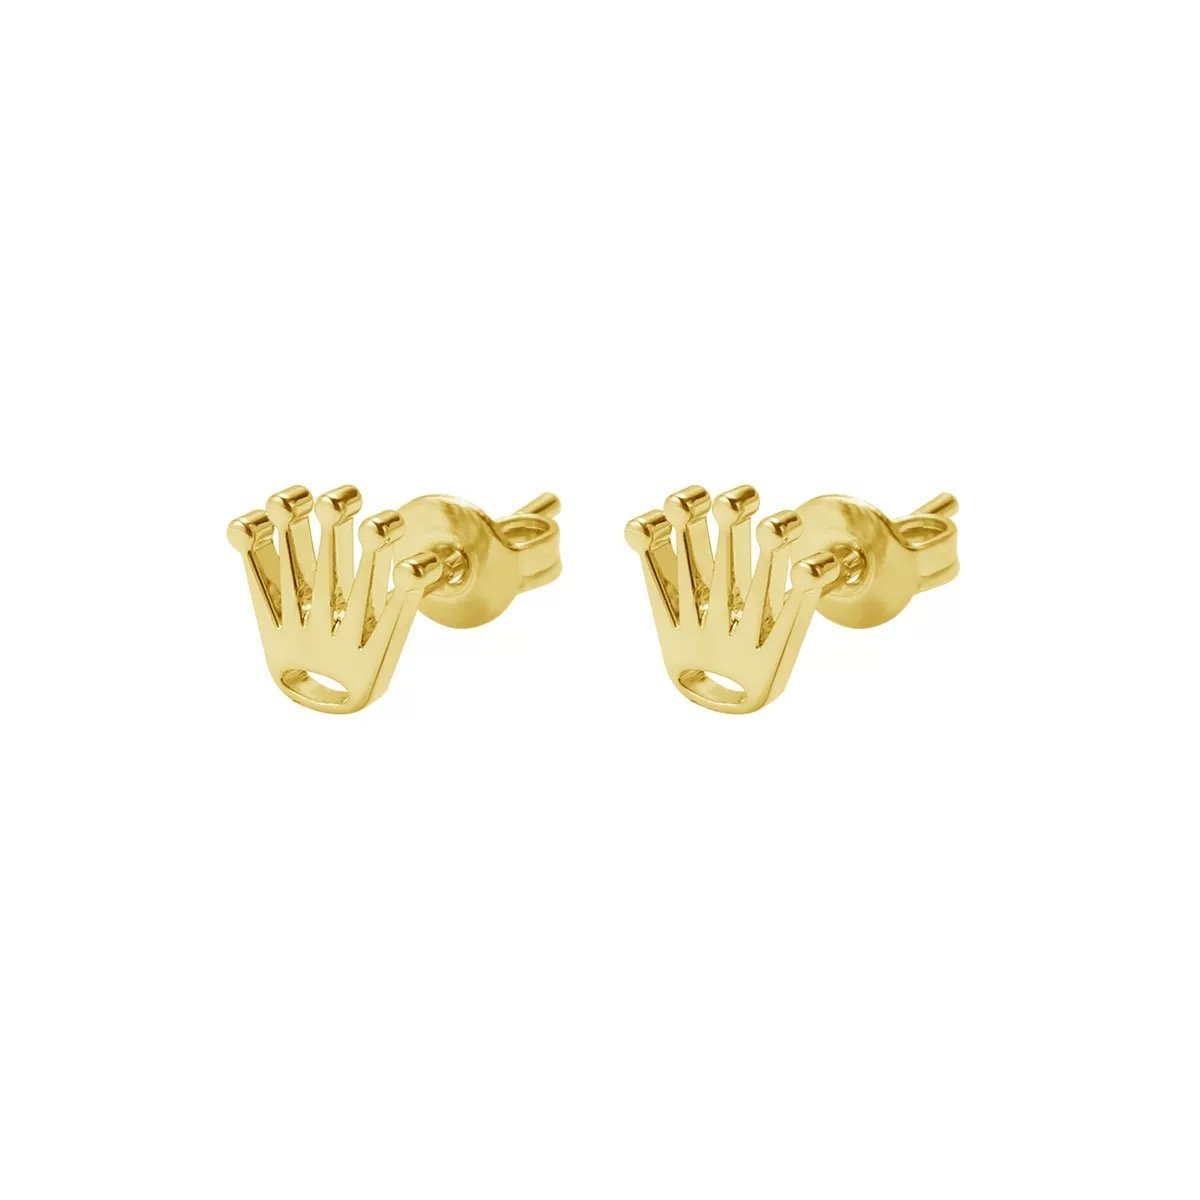 Hrh Crown Stud Earrings - HouseofLx18K Yellow Gold